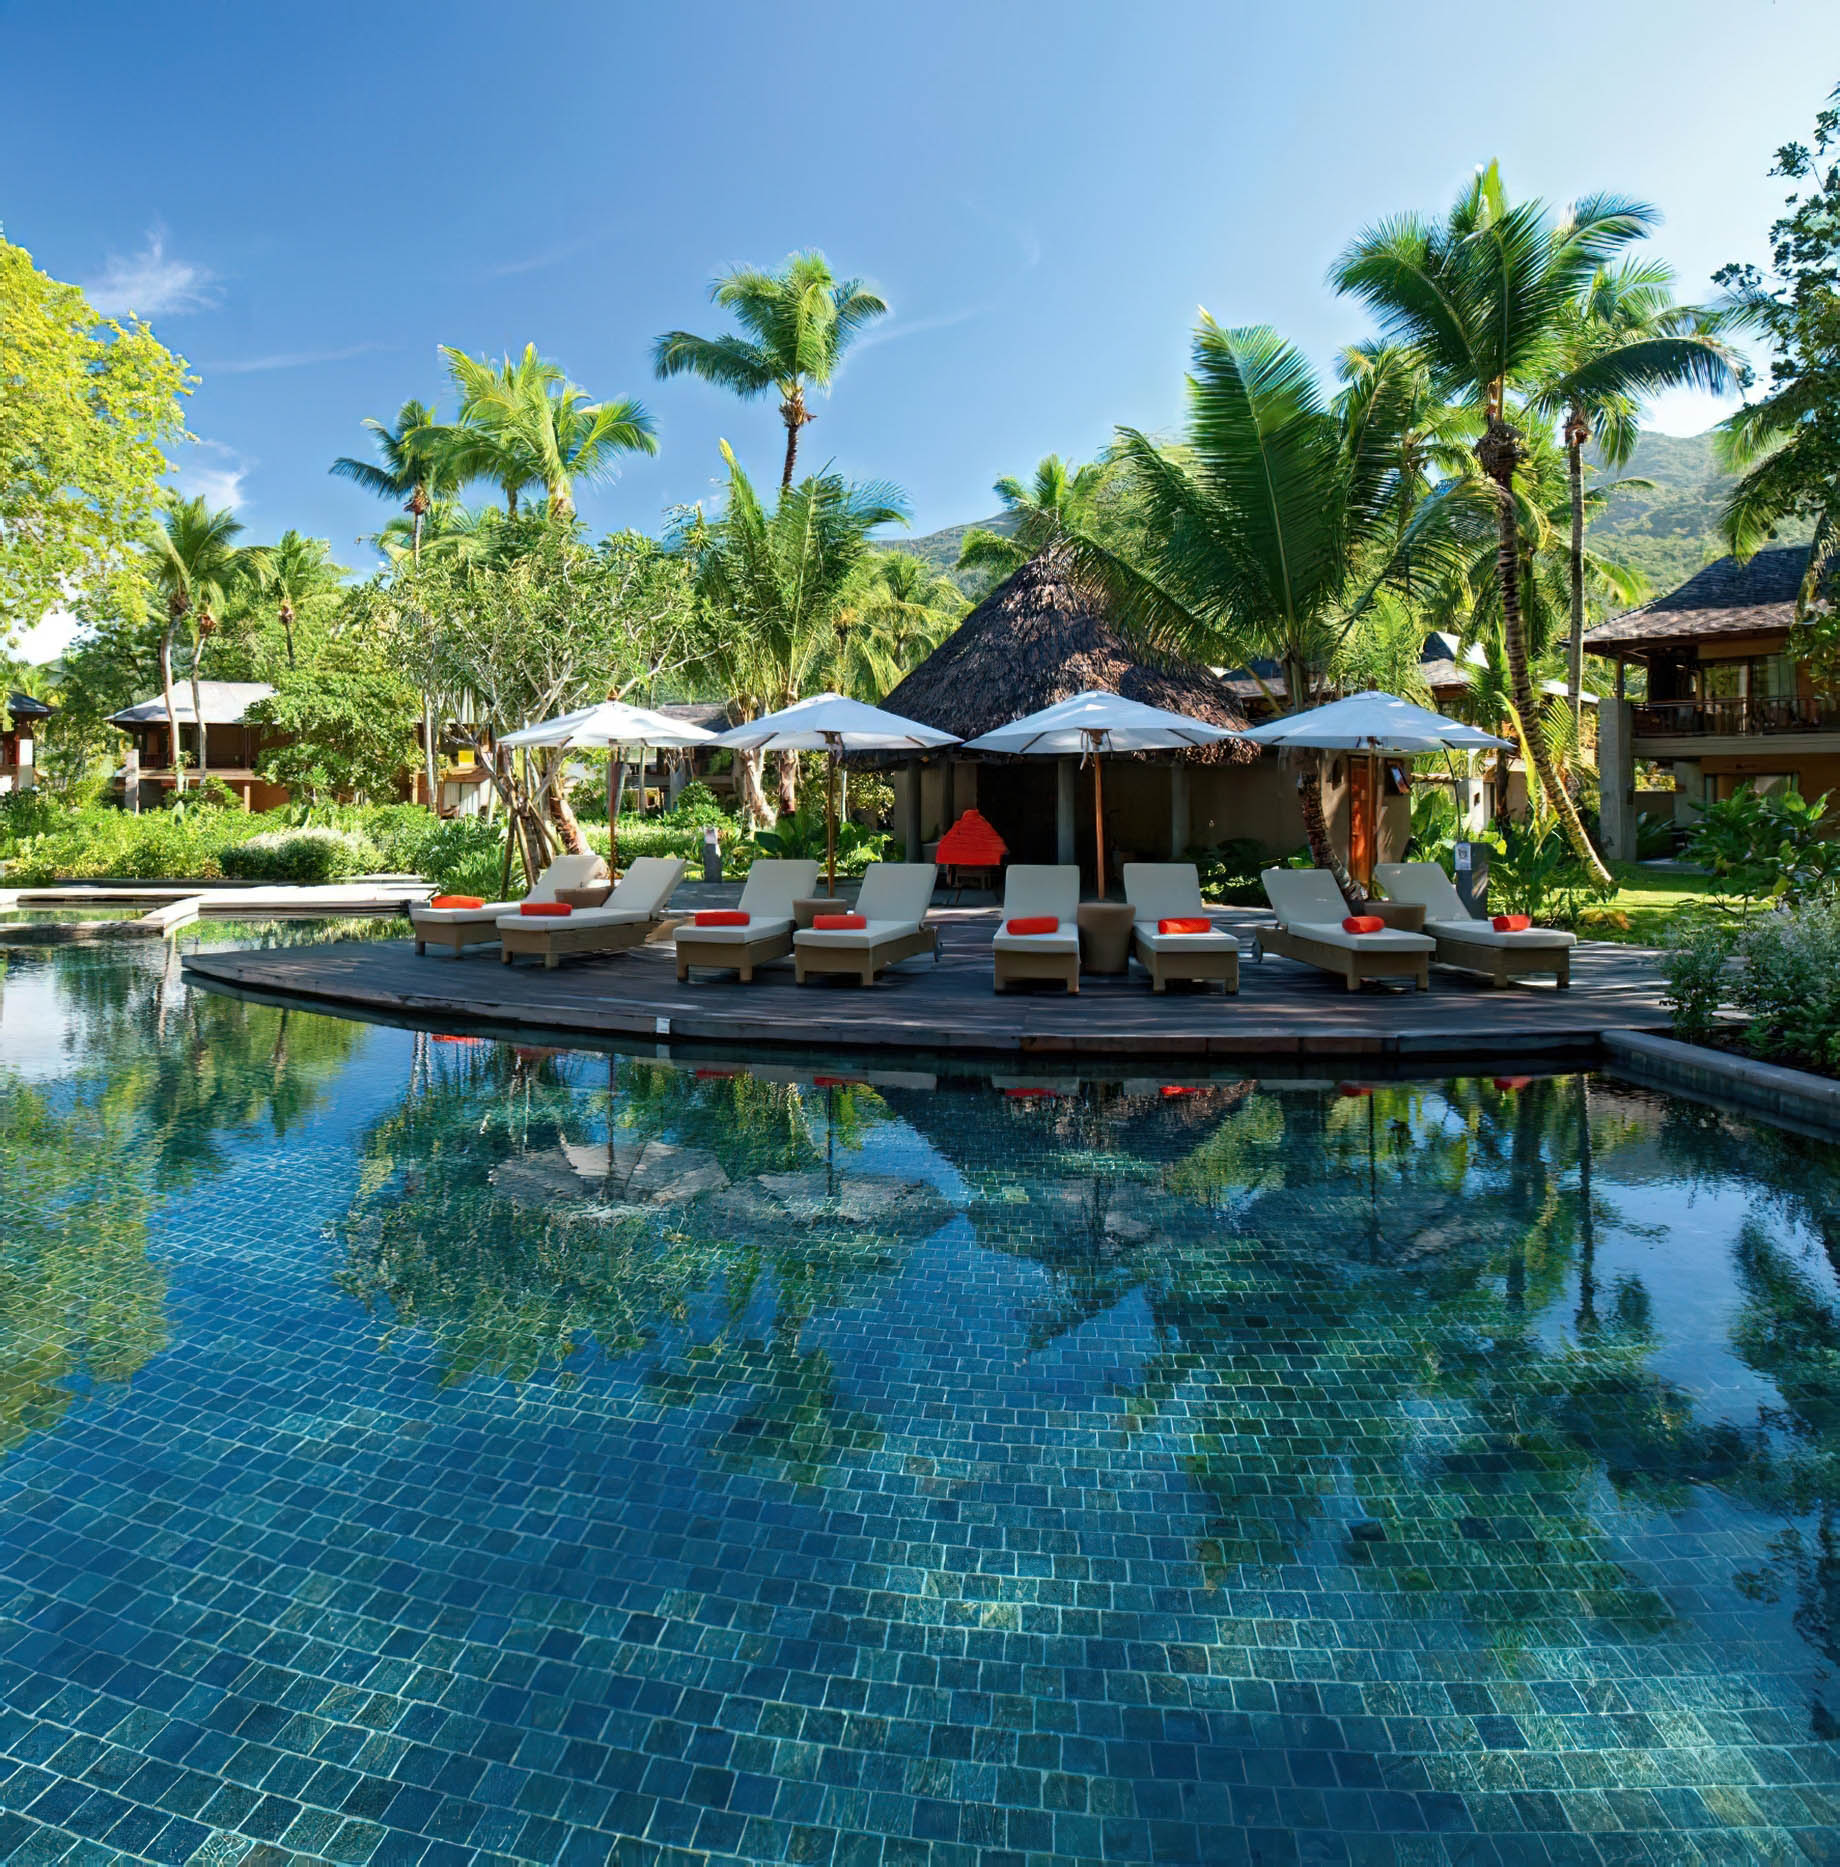 Constance Ephelia Resort - Port Launay, Mahe, Seychelles - Outdoor Pool Deck